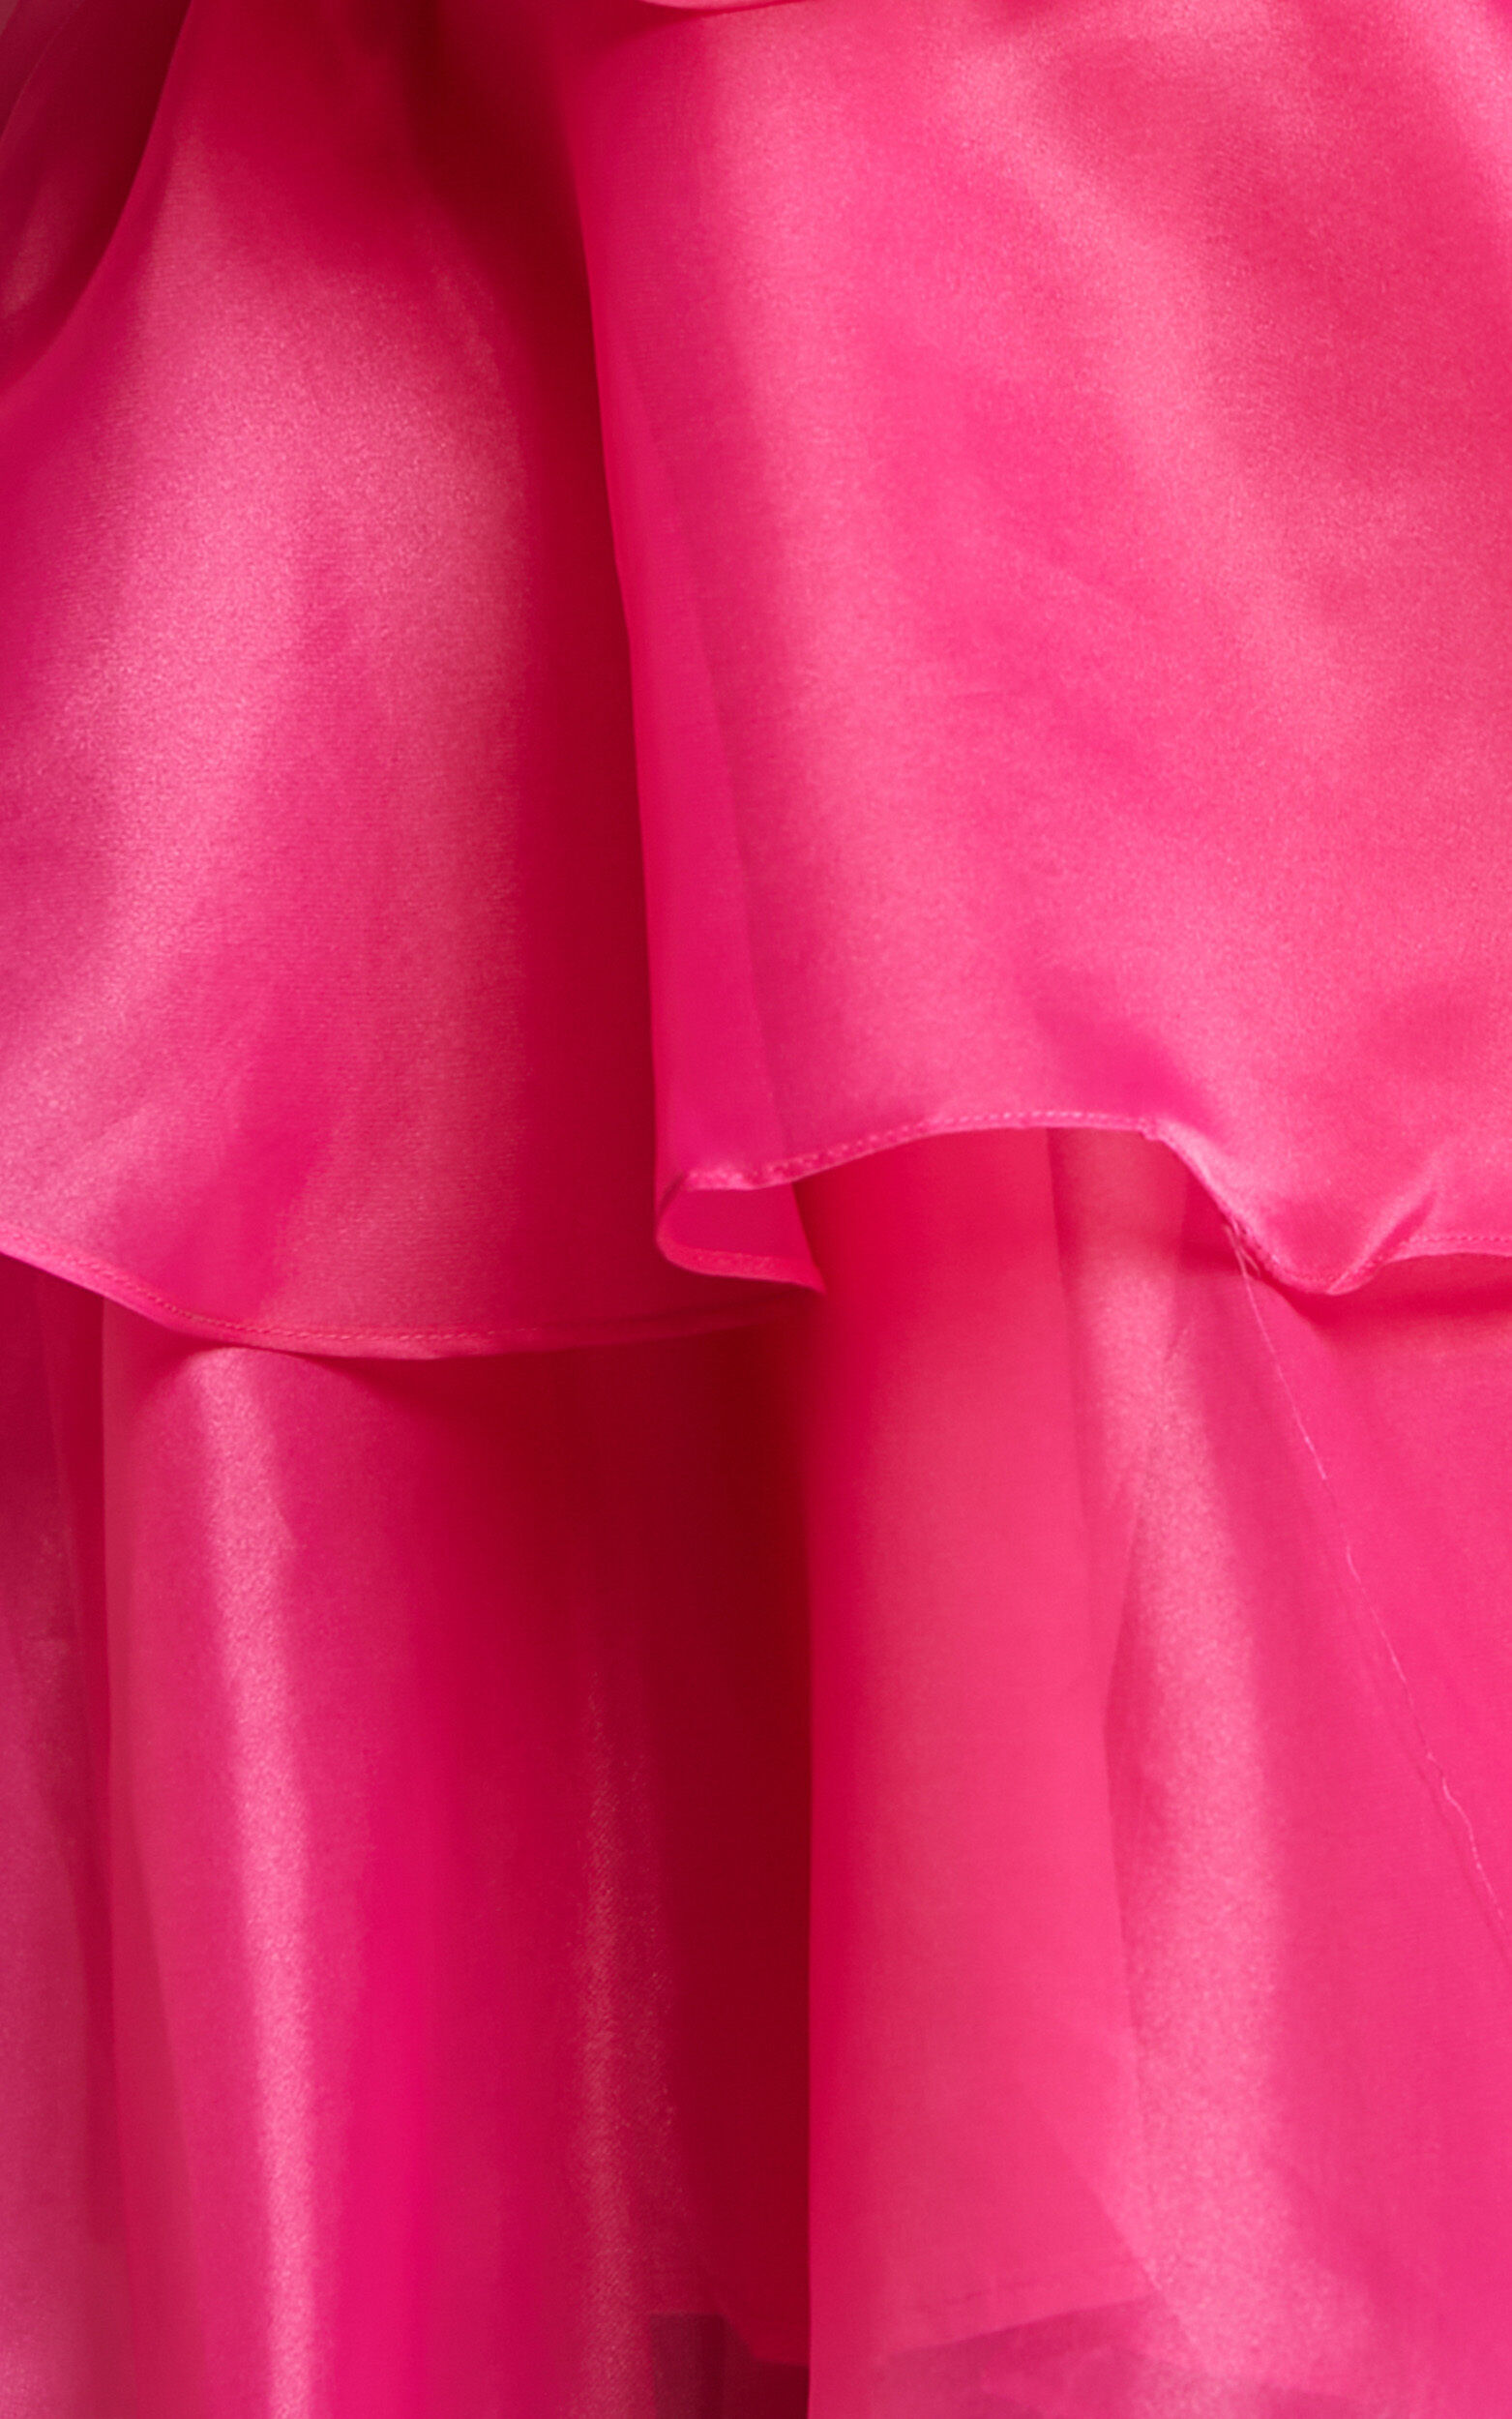 Ritta Mini Dress - Strapless Layered Dress in Hot Pink